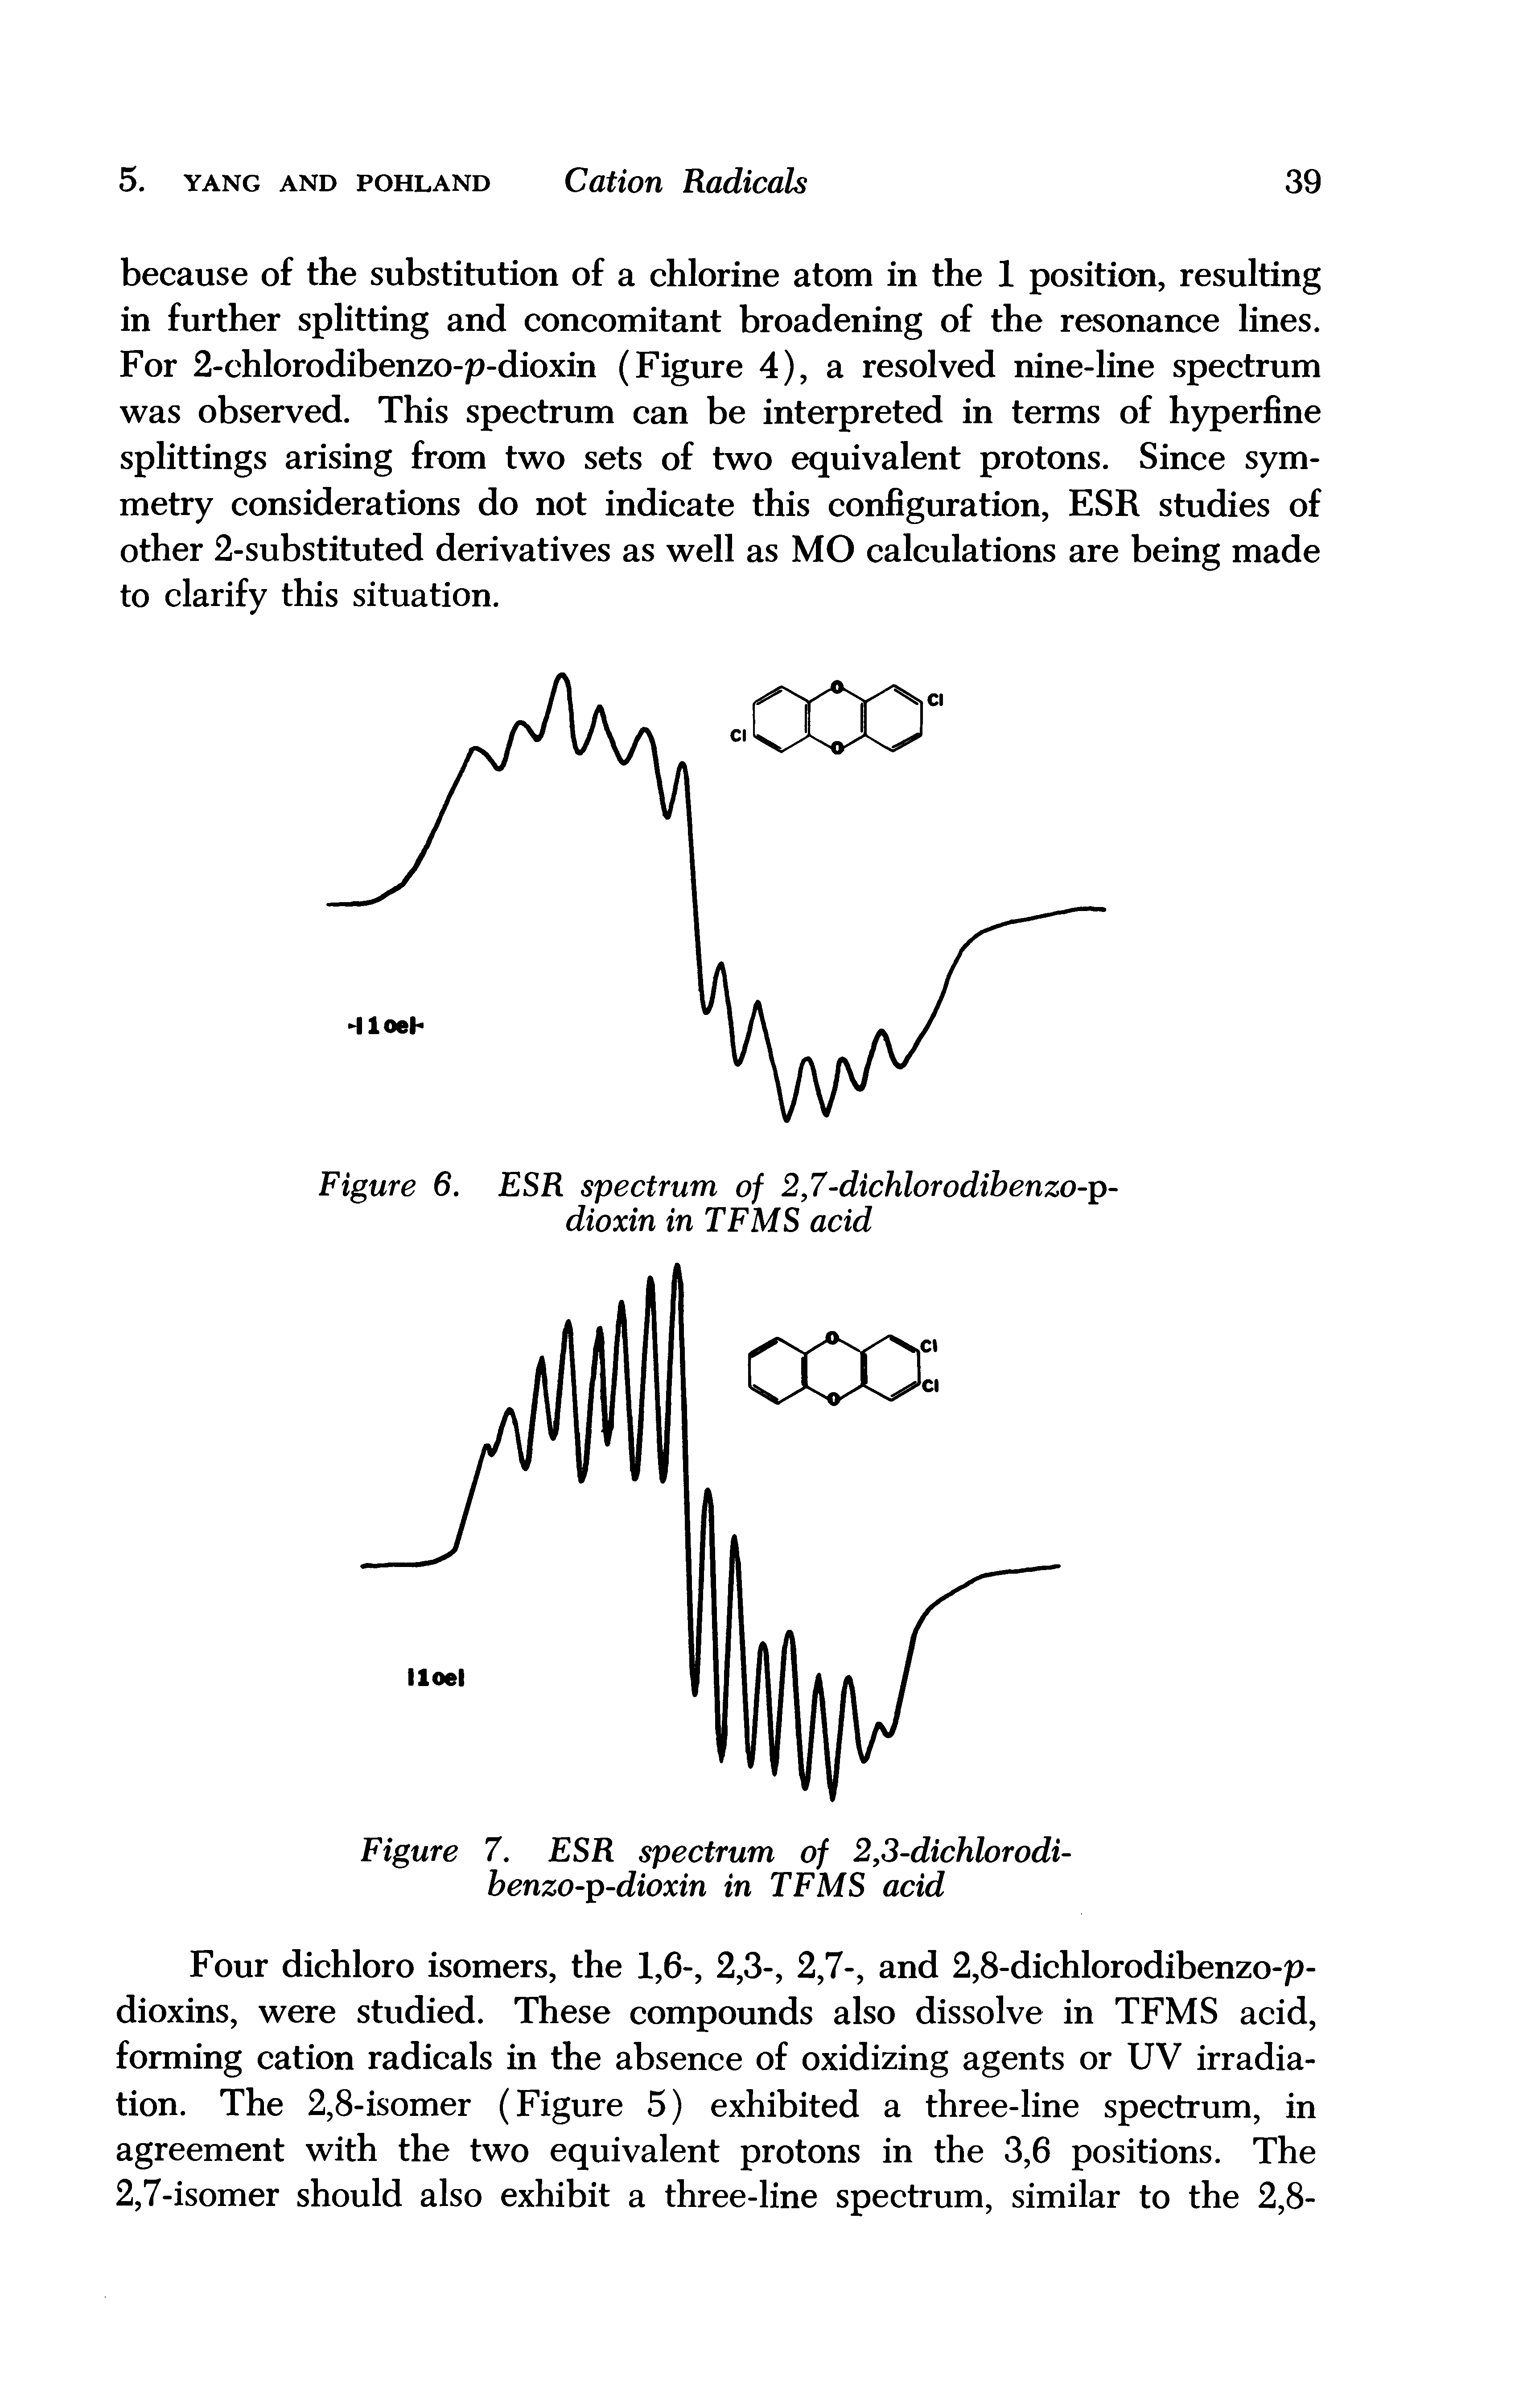 Figure 7. ESR spectrum of 2,3-dichlorodi-benzo-p-dioxin in TFMS acid...